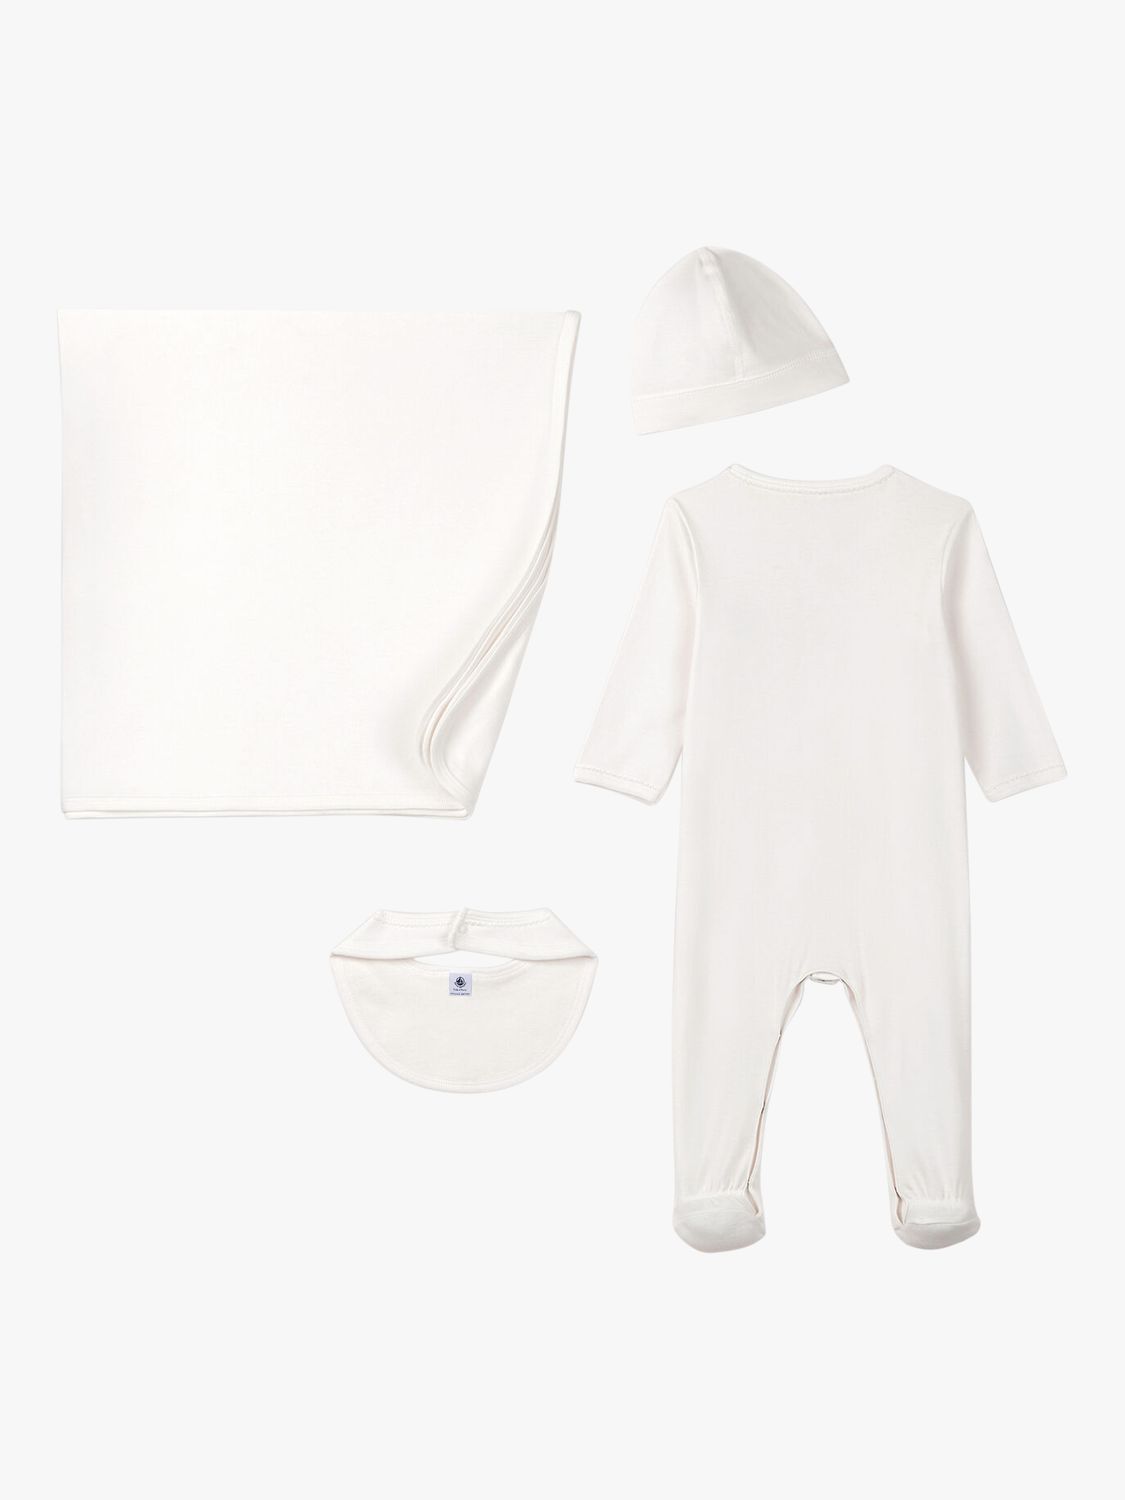 Petit Bateau Baby Sleepsuit, Bonnet, Bib & Blanket Gift Set, White, 6 months